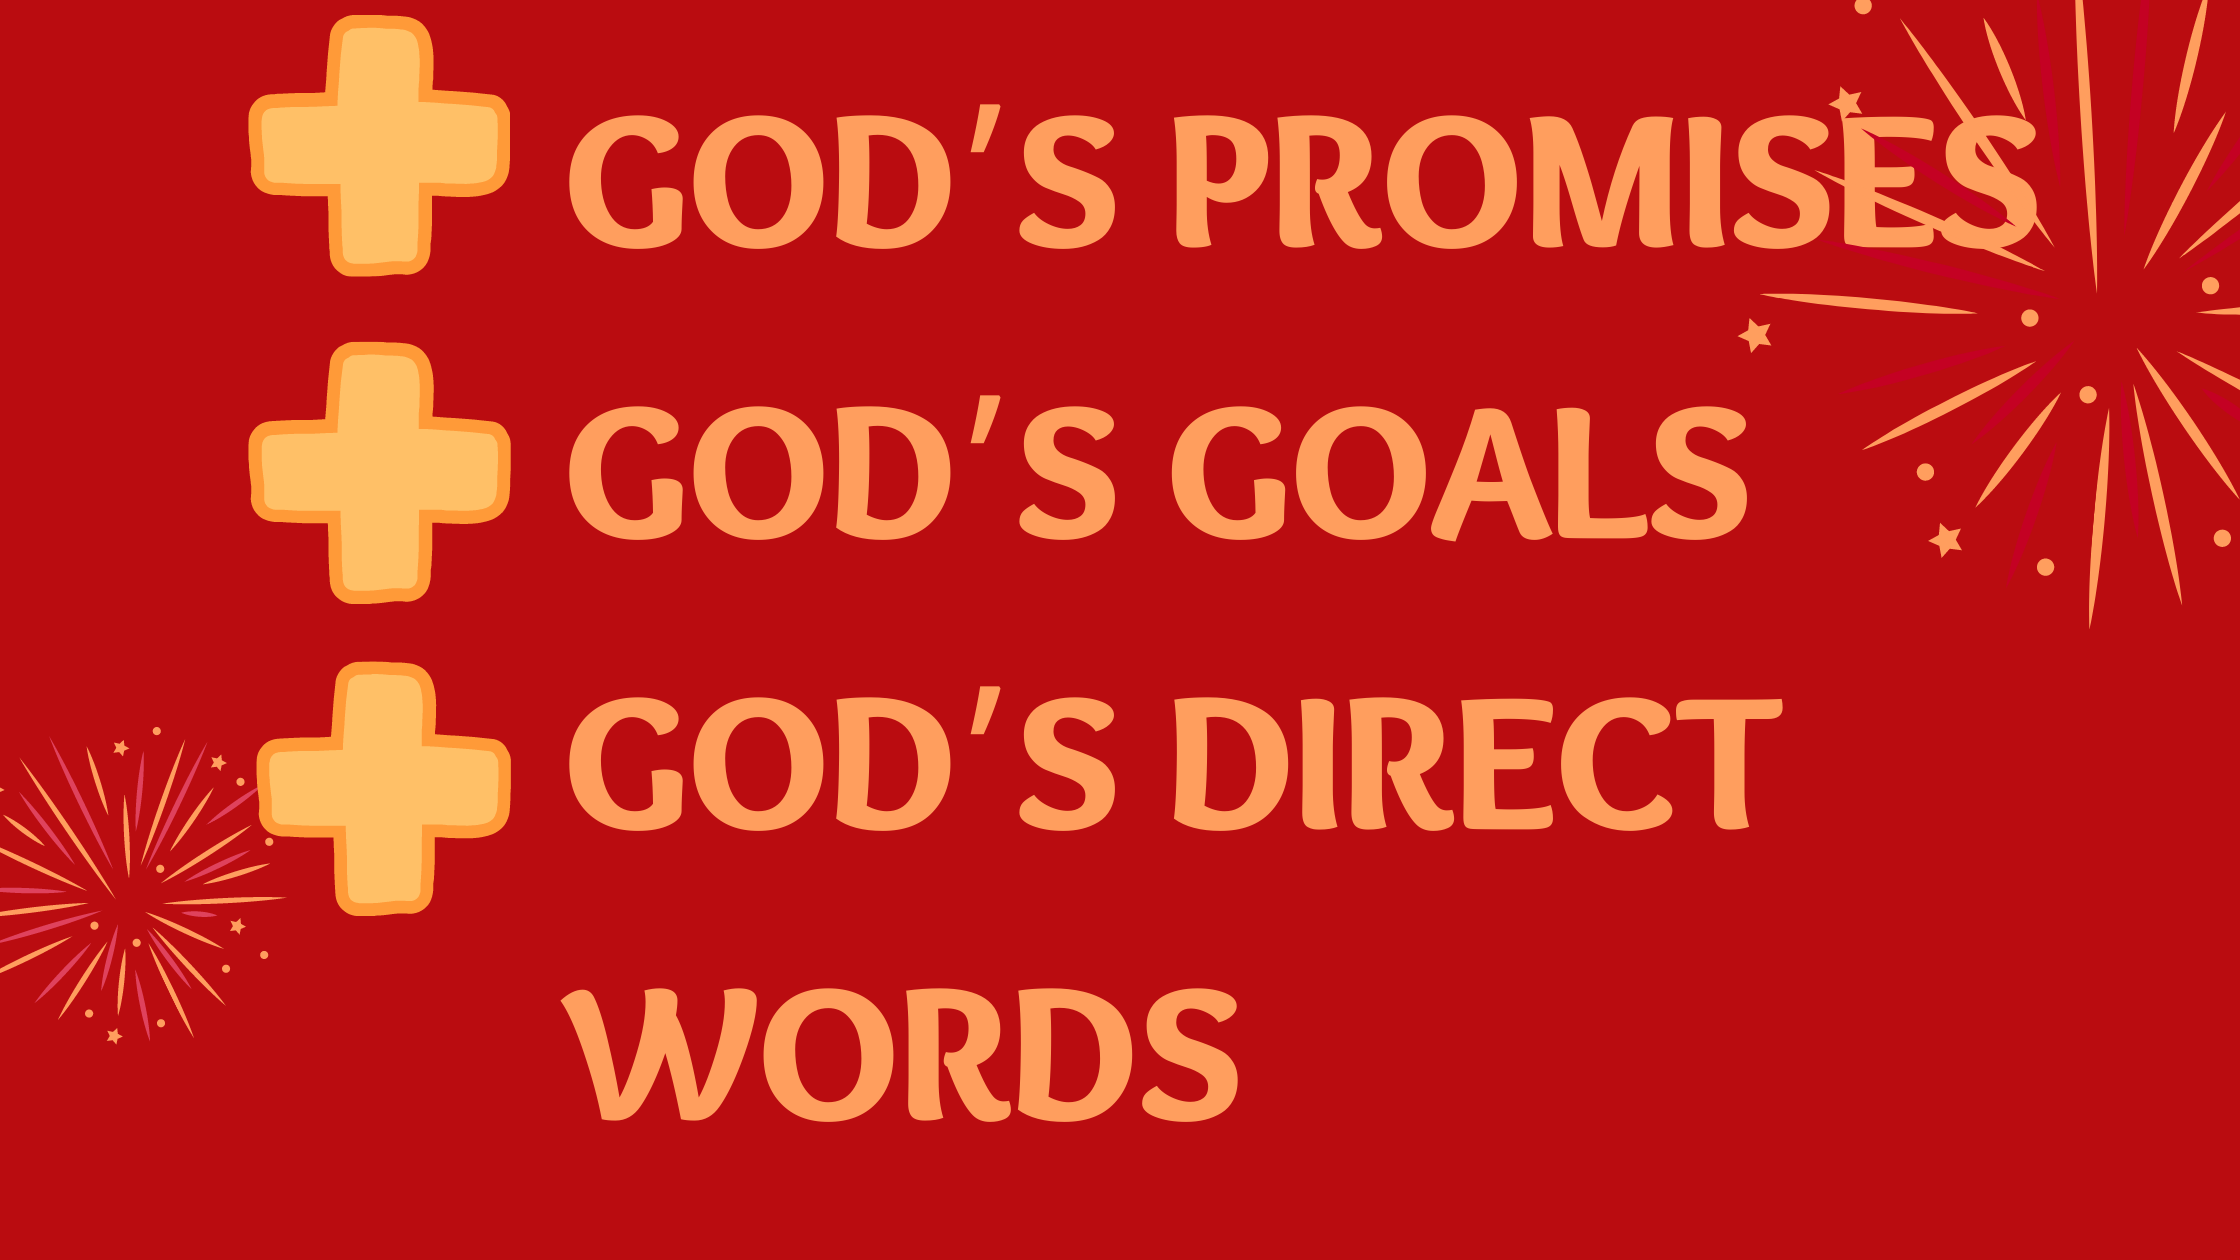 Devils strategy is adding to God’s promises God’s goals God’s direct words